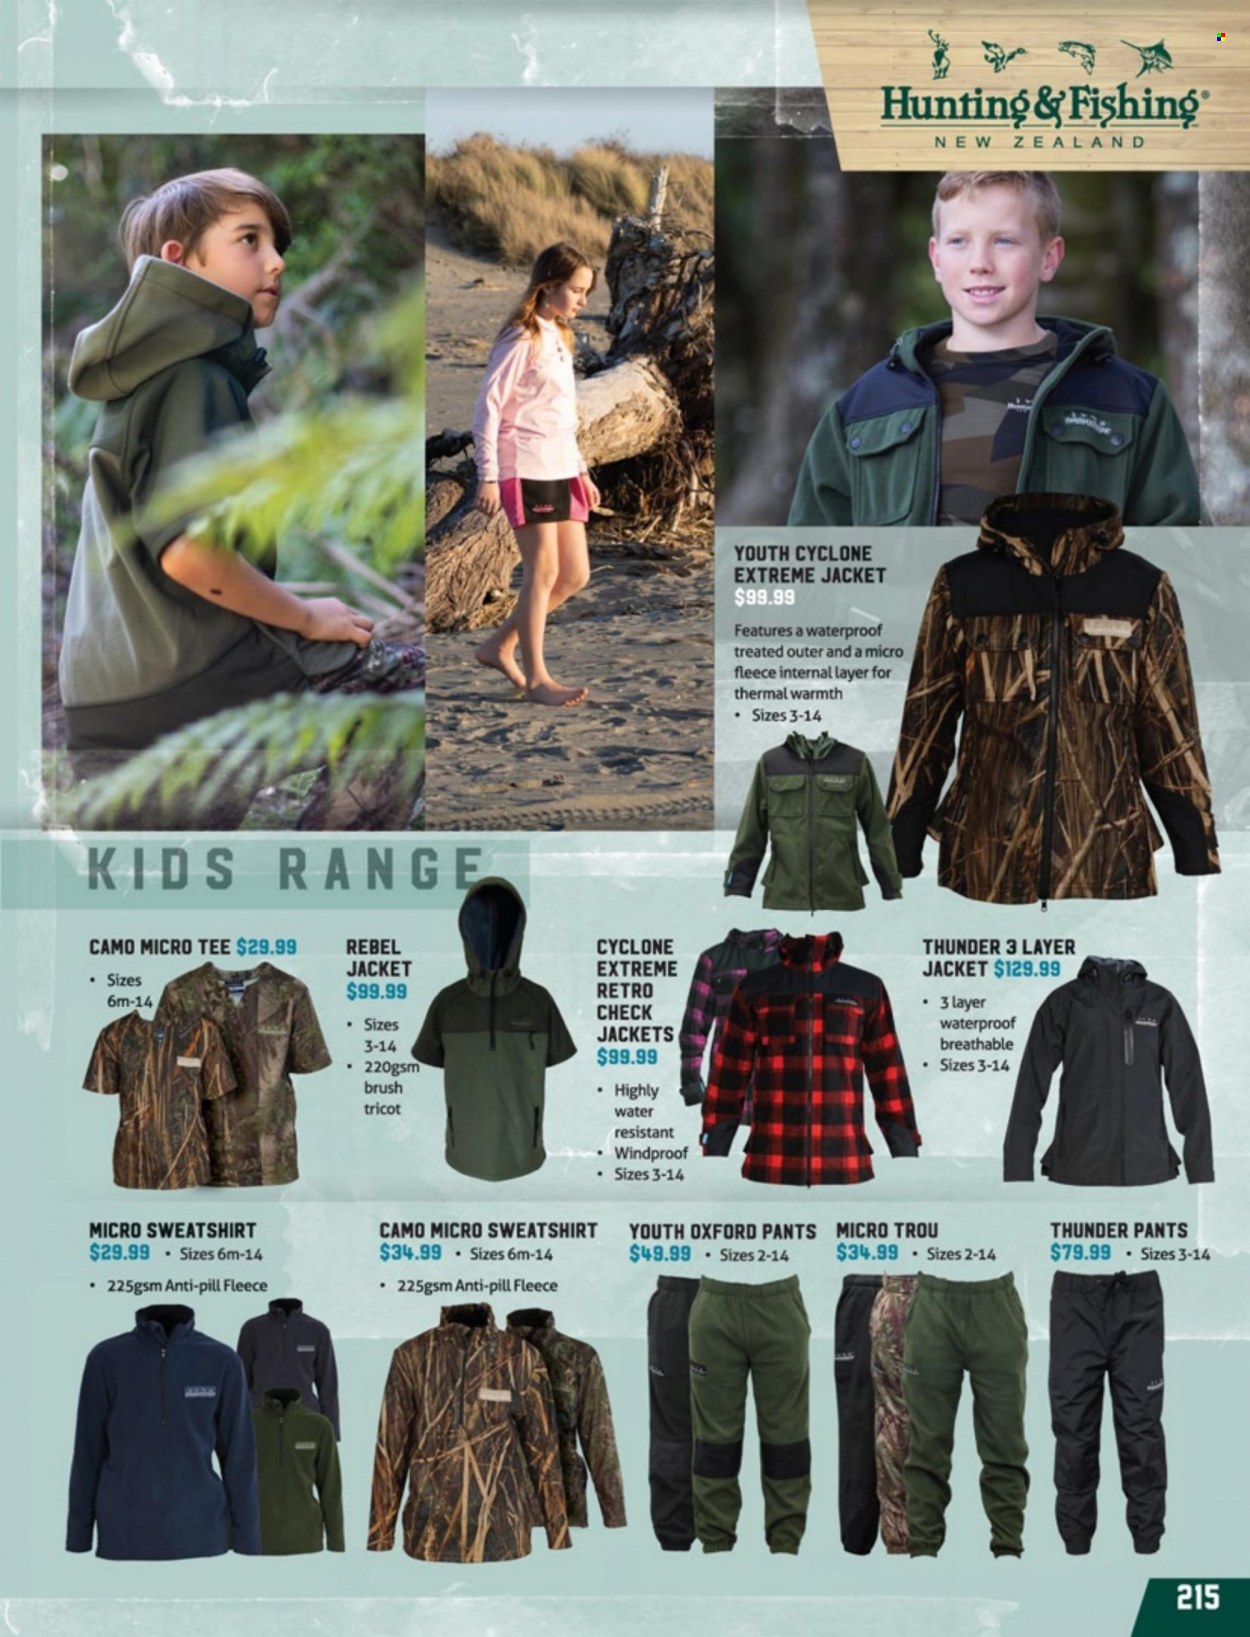 Hunting & Fishing mailer . Page 215.